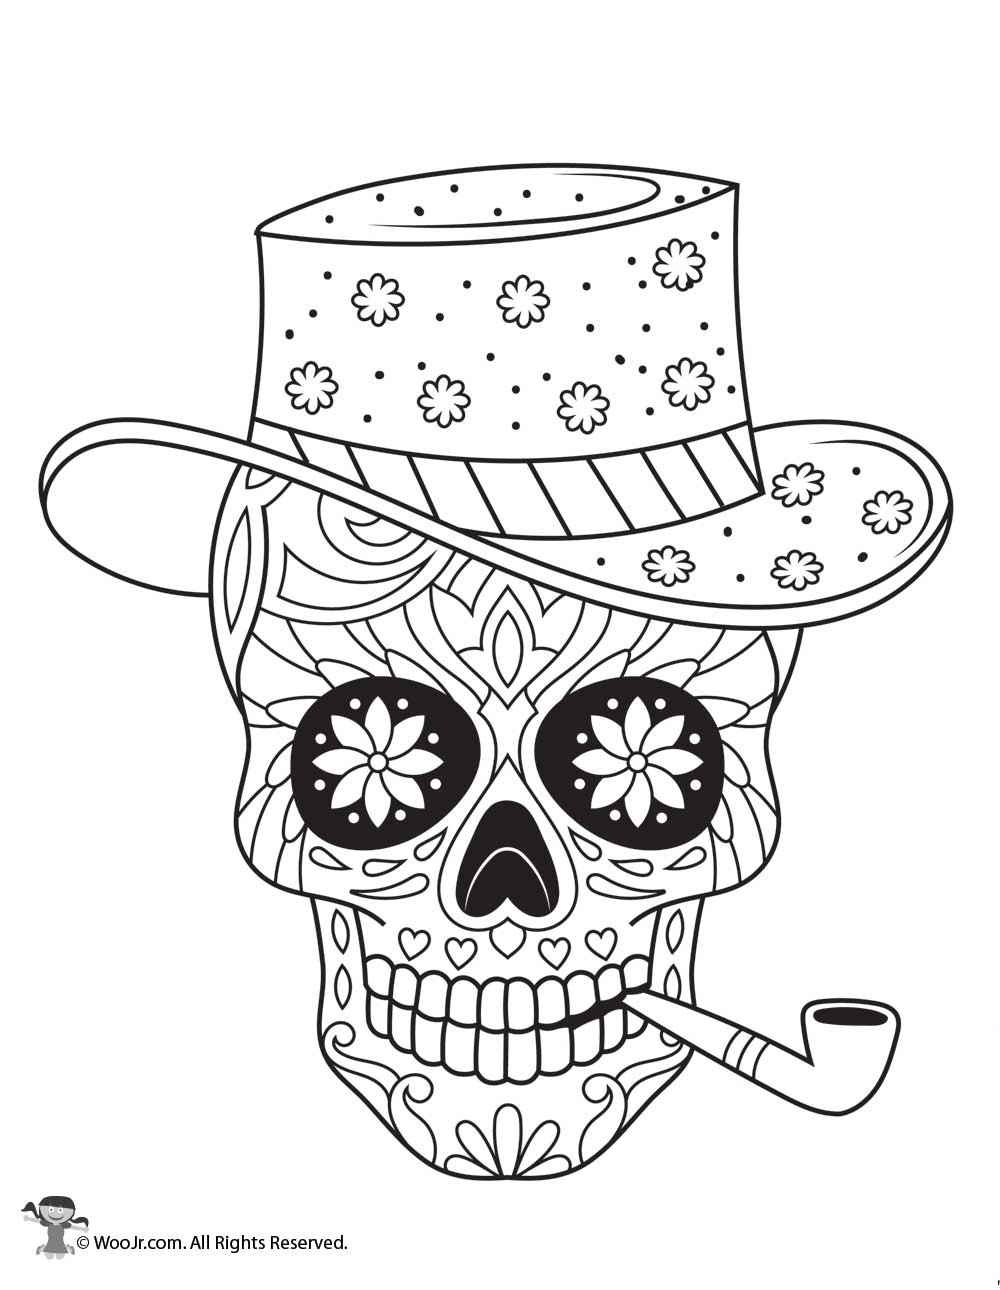 Printable Sugar Skulls Coloring Pages
 Sugar Skulls Adult Coloring Page